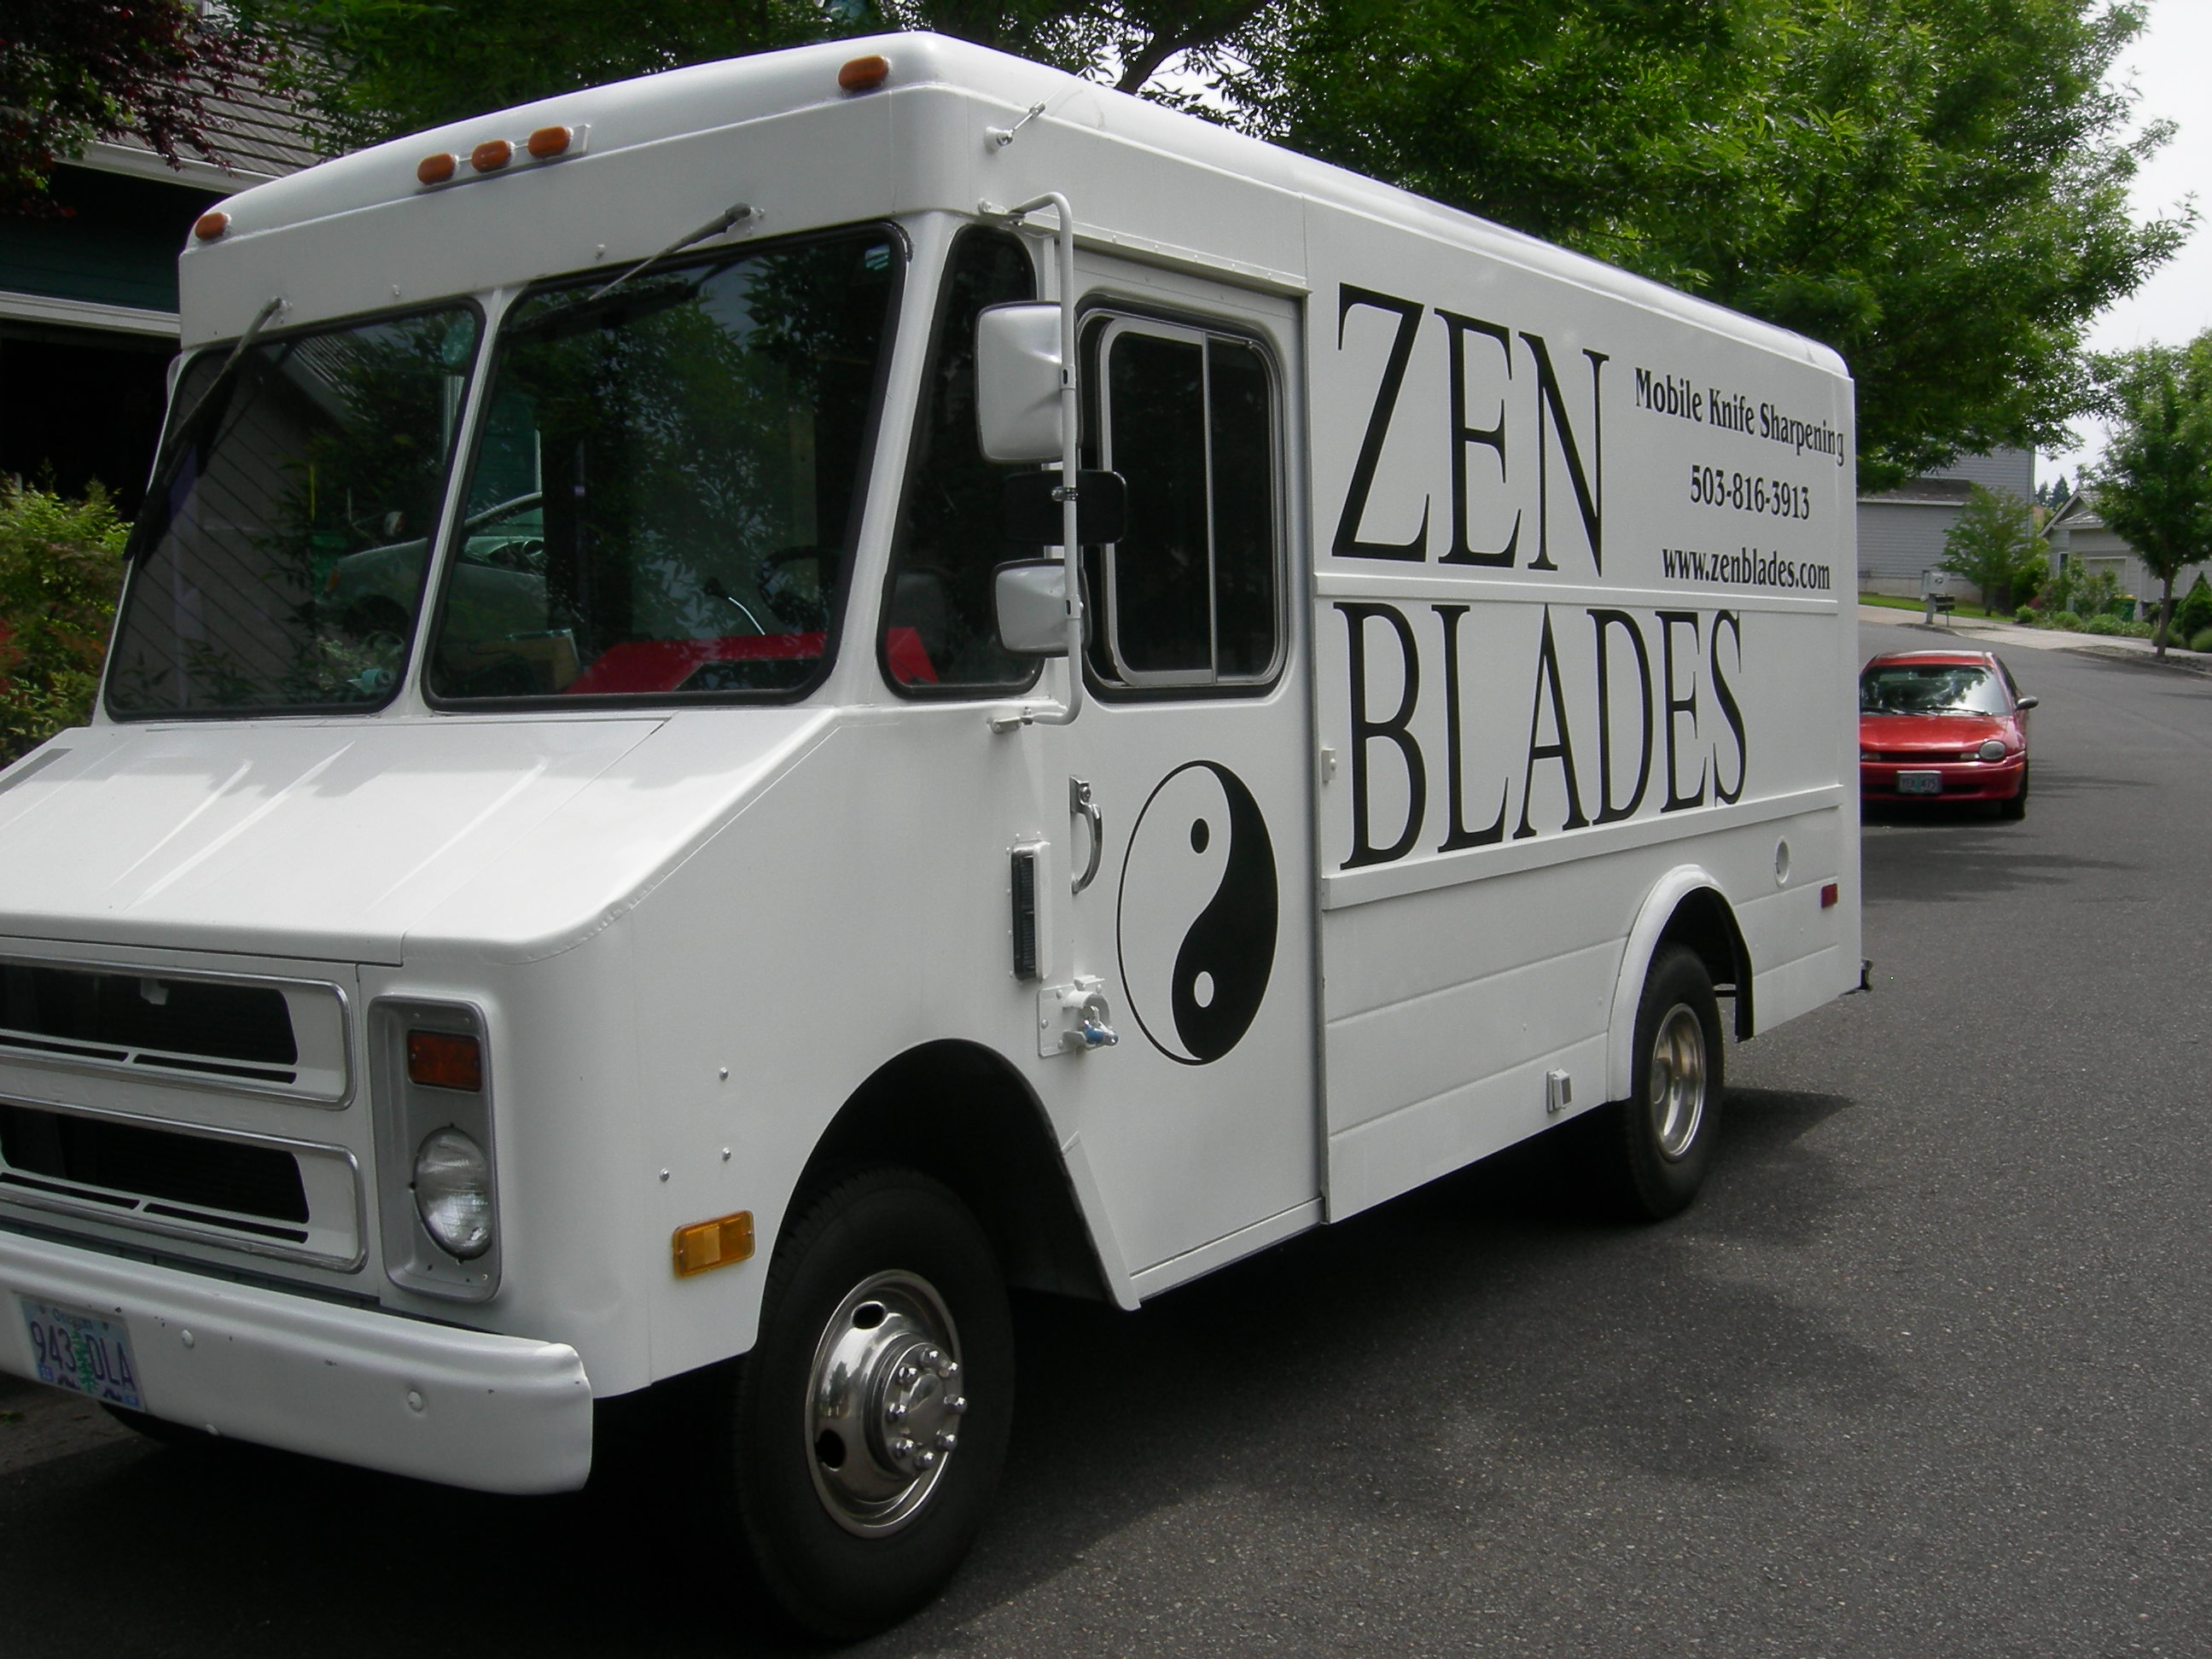 the Zen Blades mobile knife sharpening van